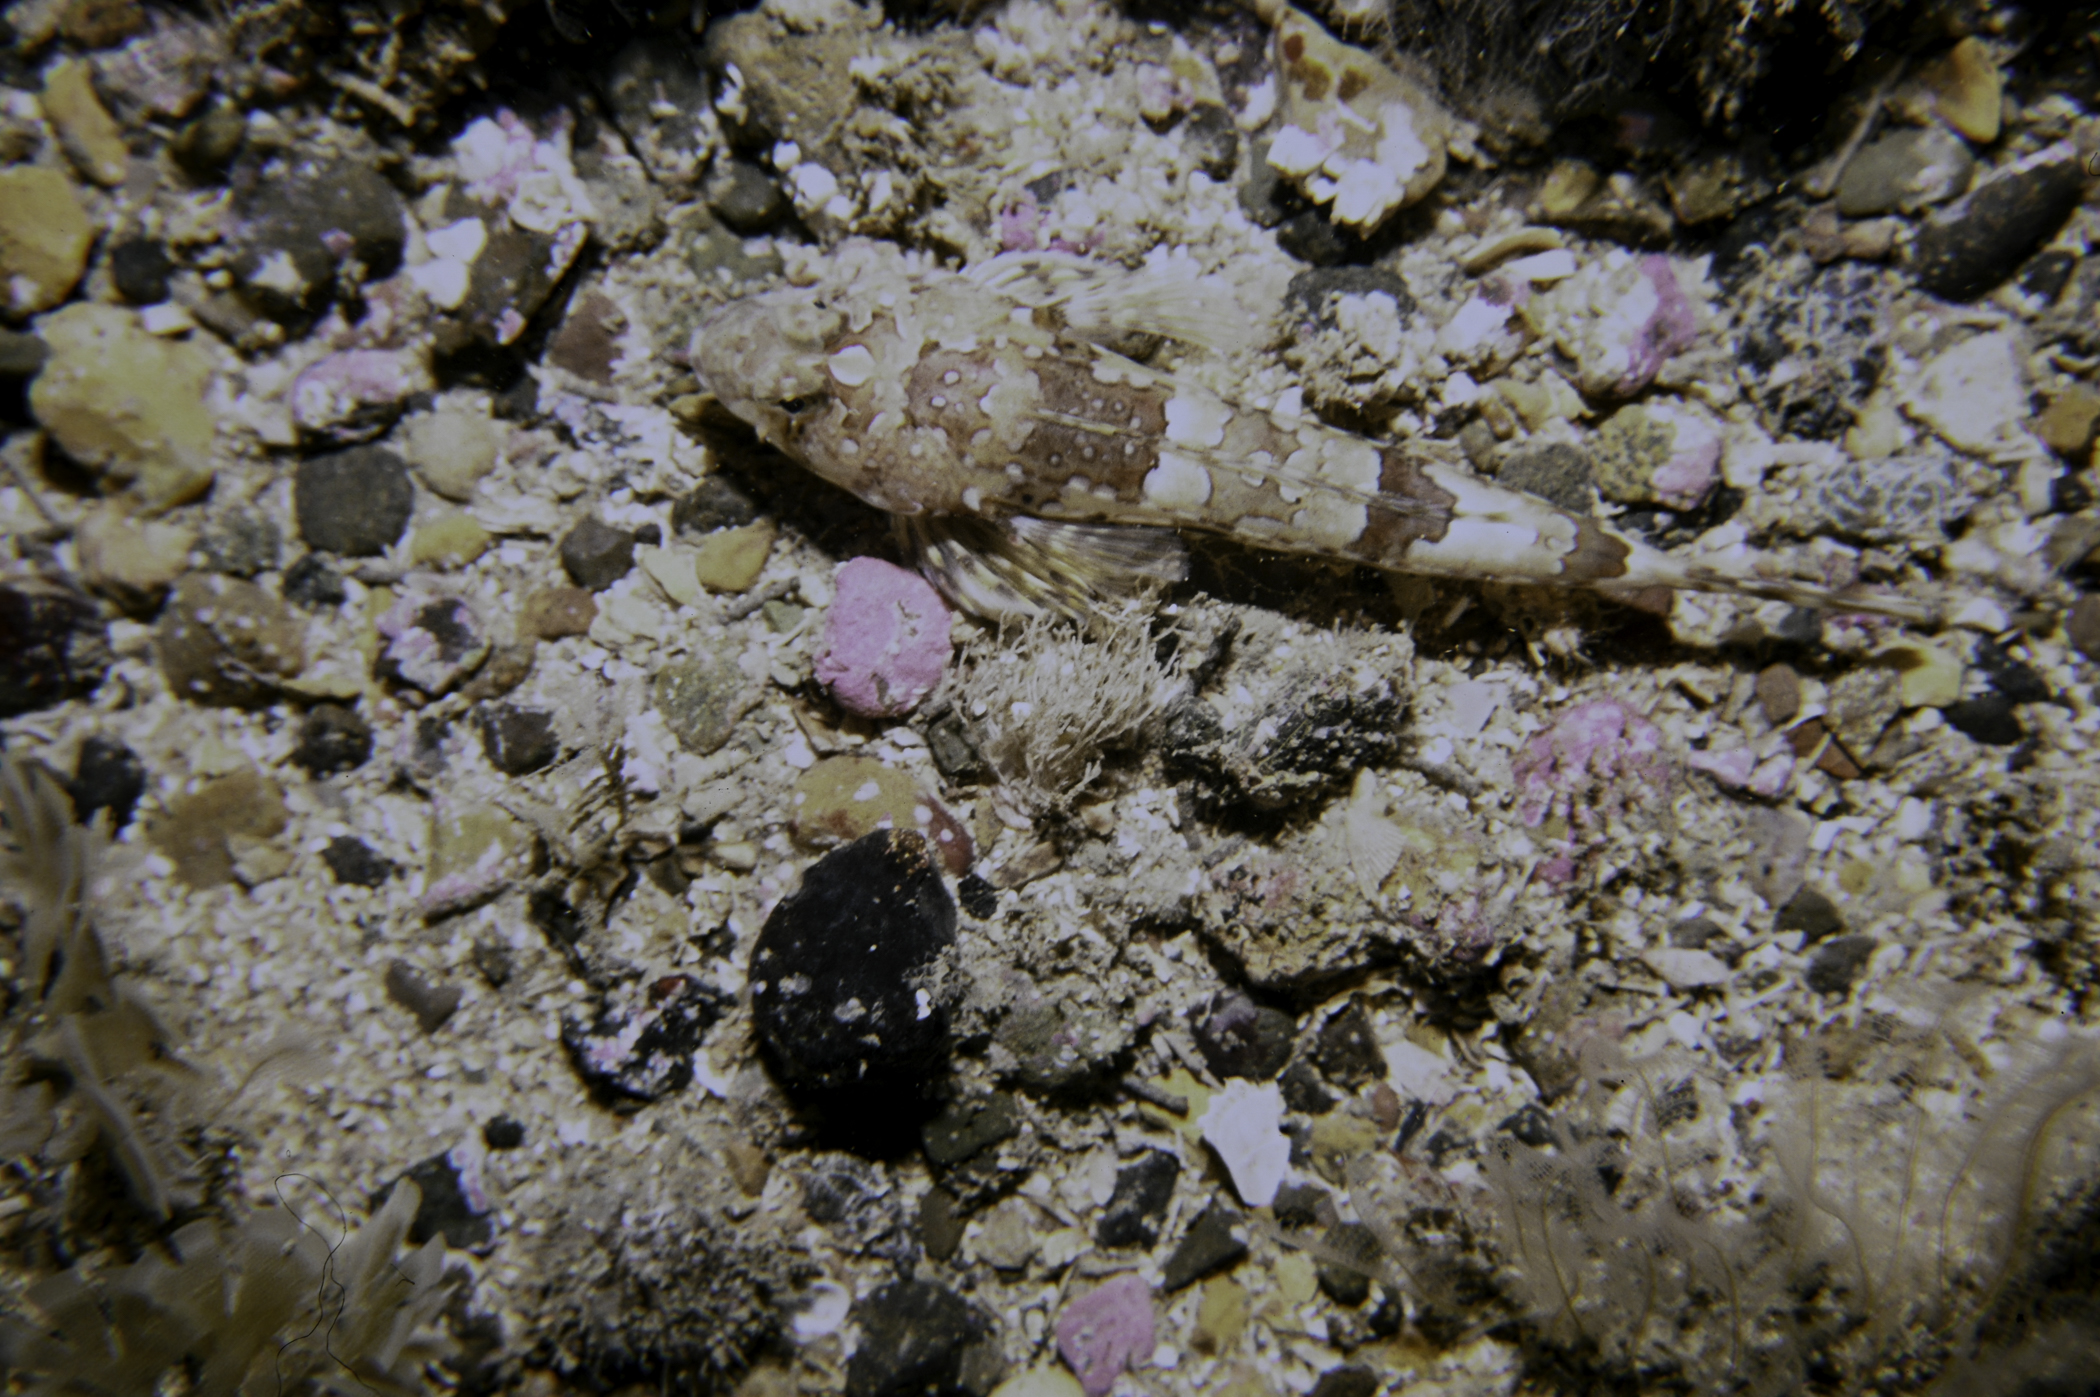 Callionymus reticulatus. Site: Church Bay, Rathlin Island. 